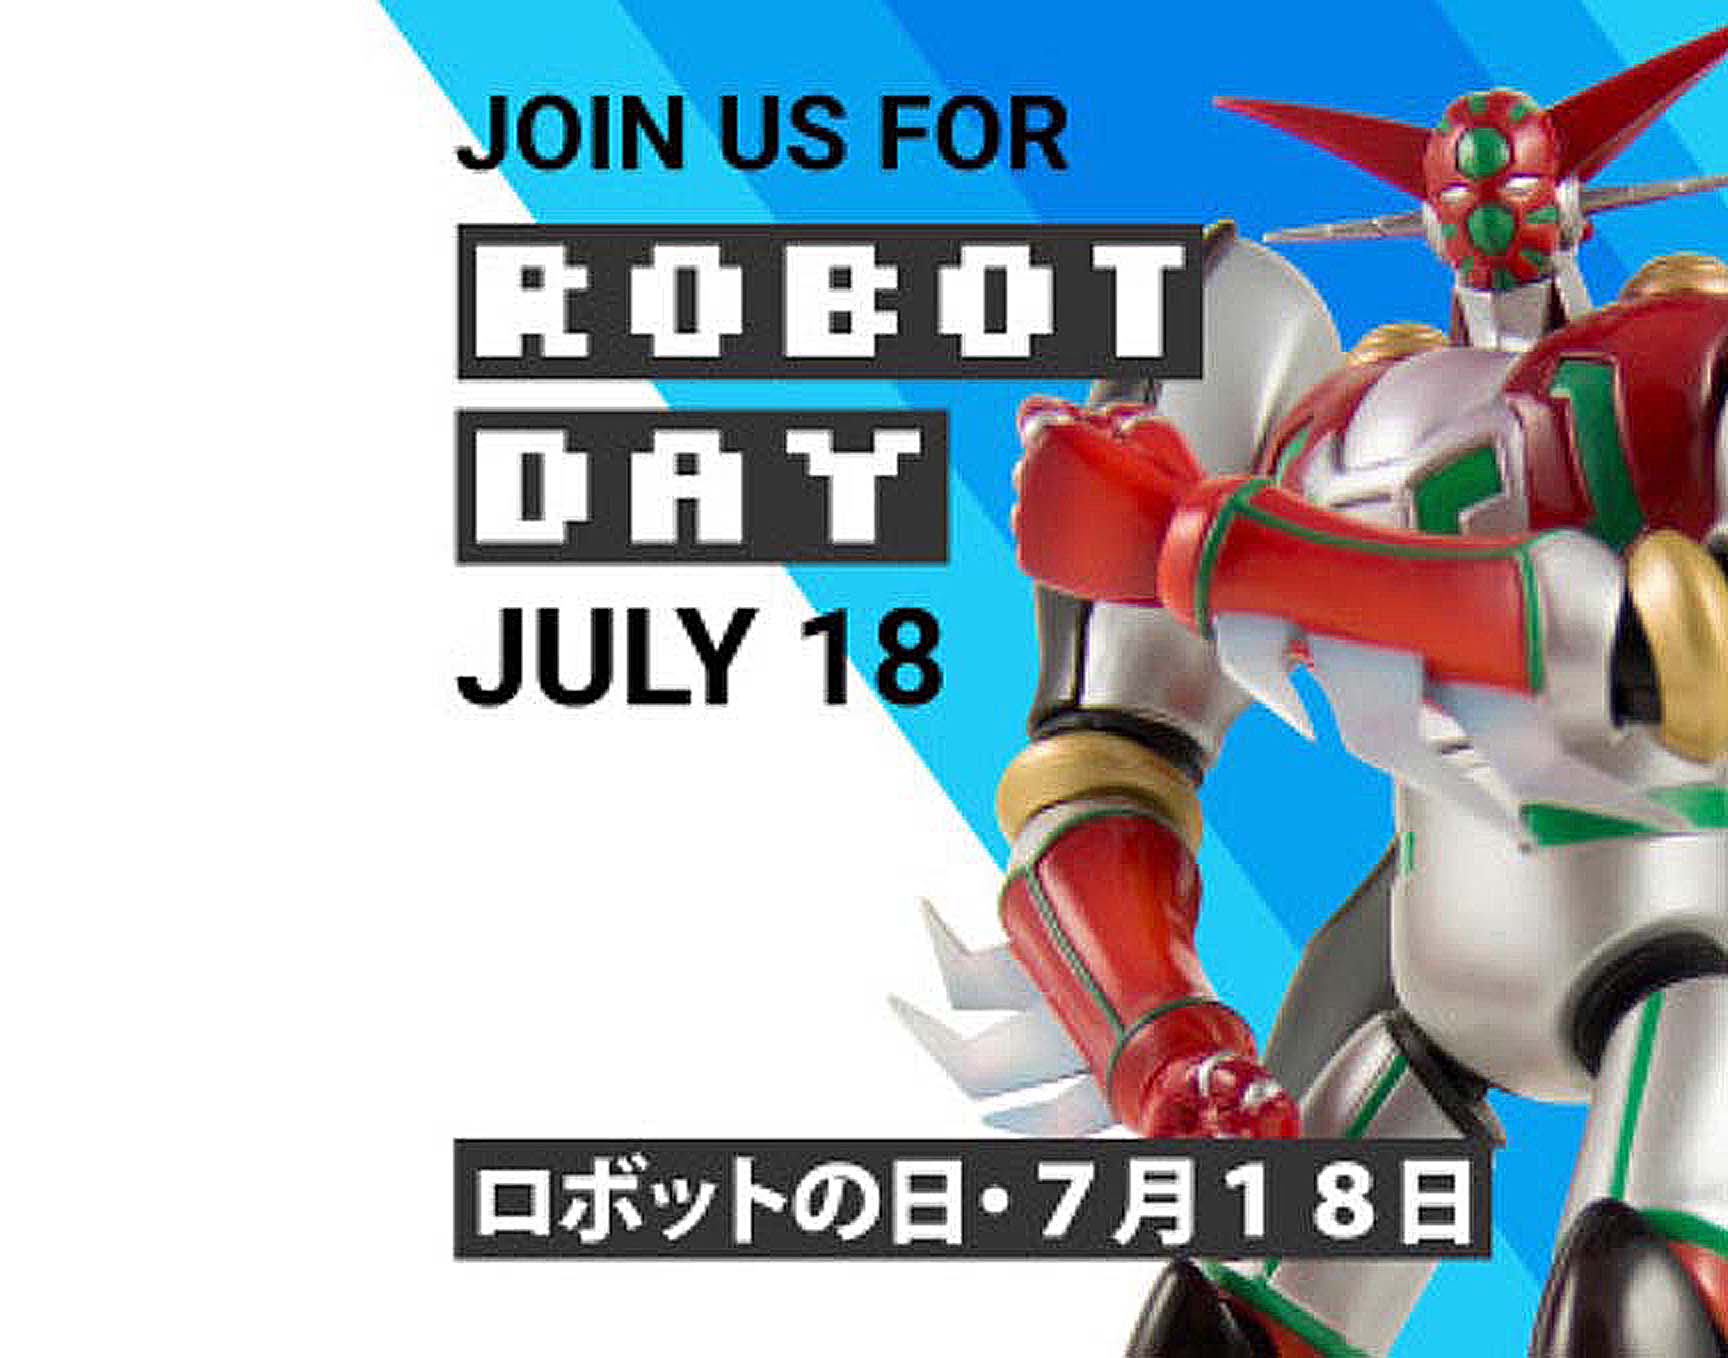 Robot Day